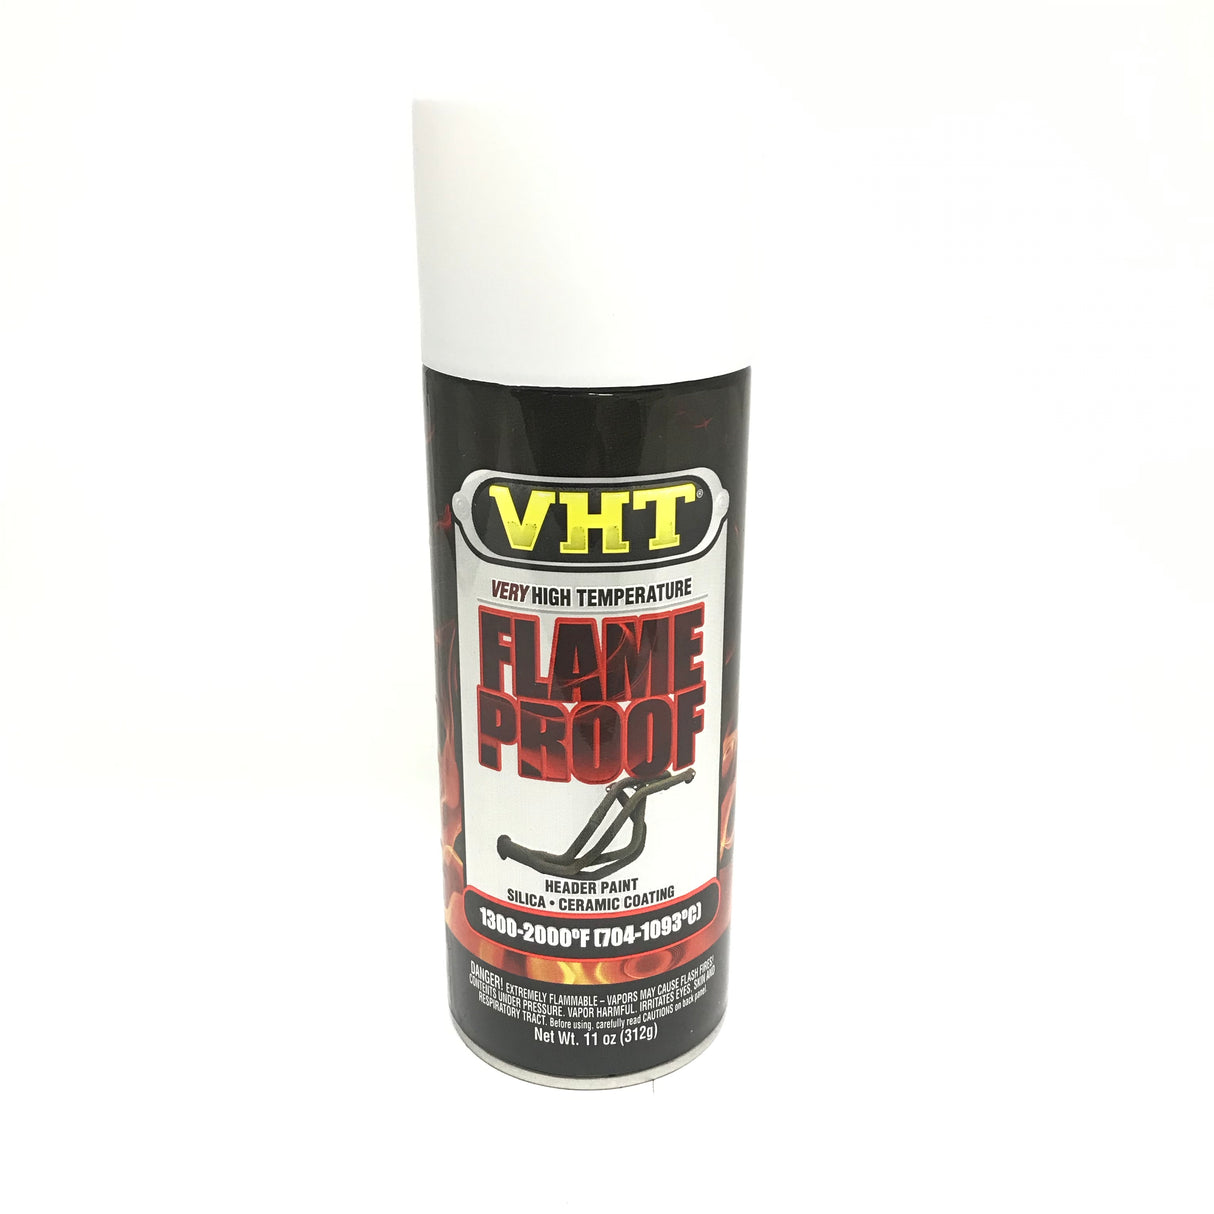 VHT SP101 FLAT WHITE High Temperature FlameProof Header Paint - 11 oz